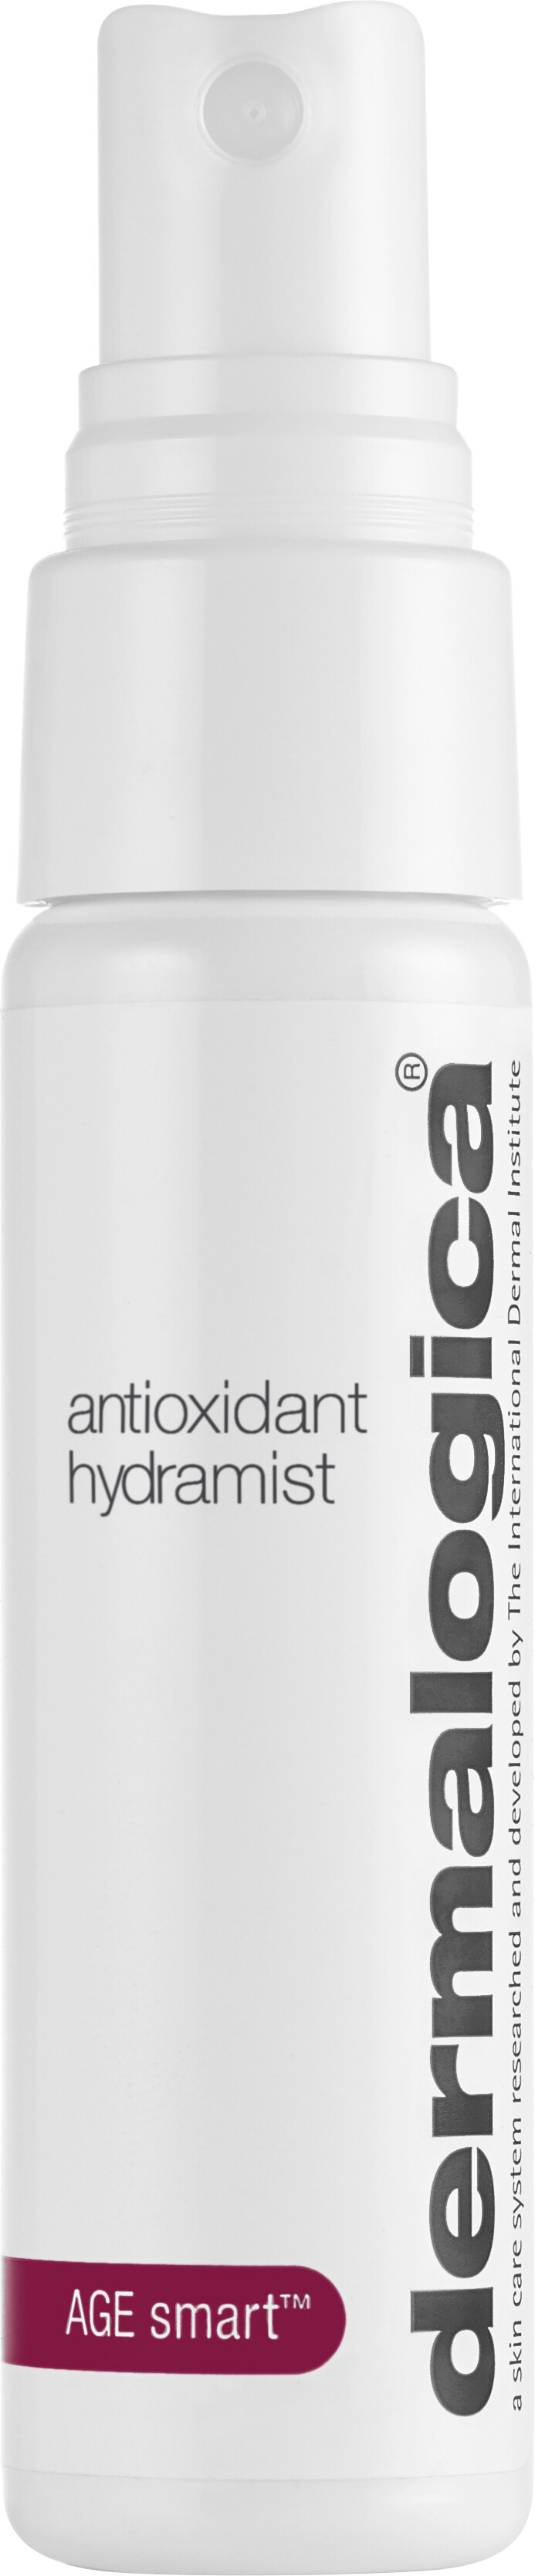 Dermalogica Age Smart Antioxidant Hydramist 30ml